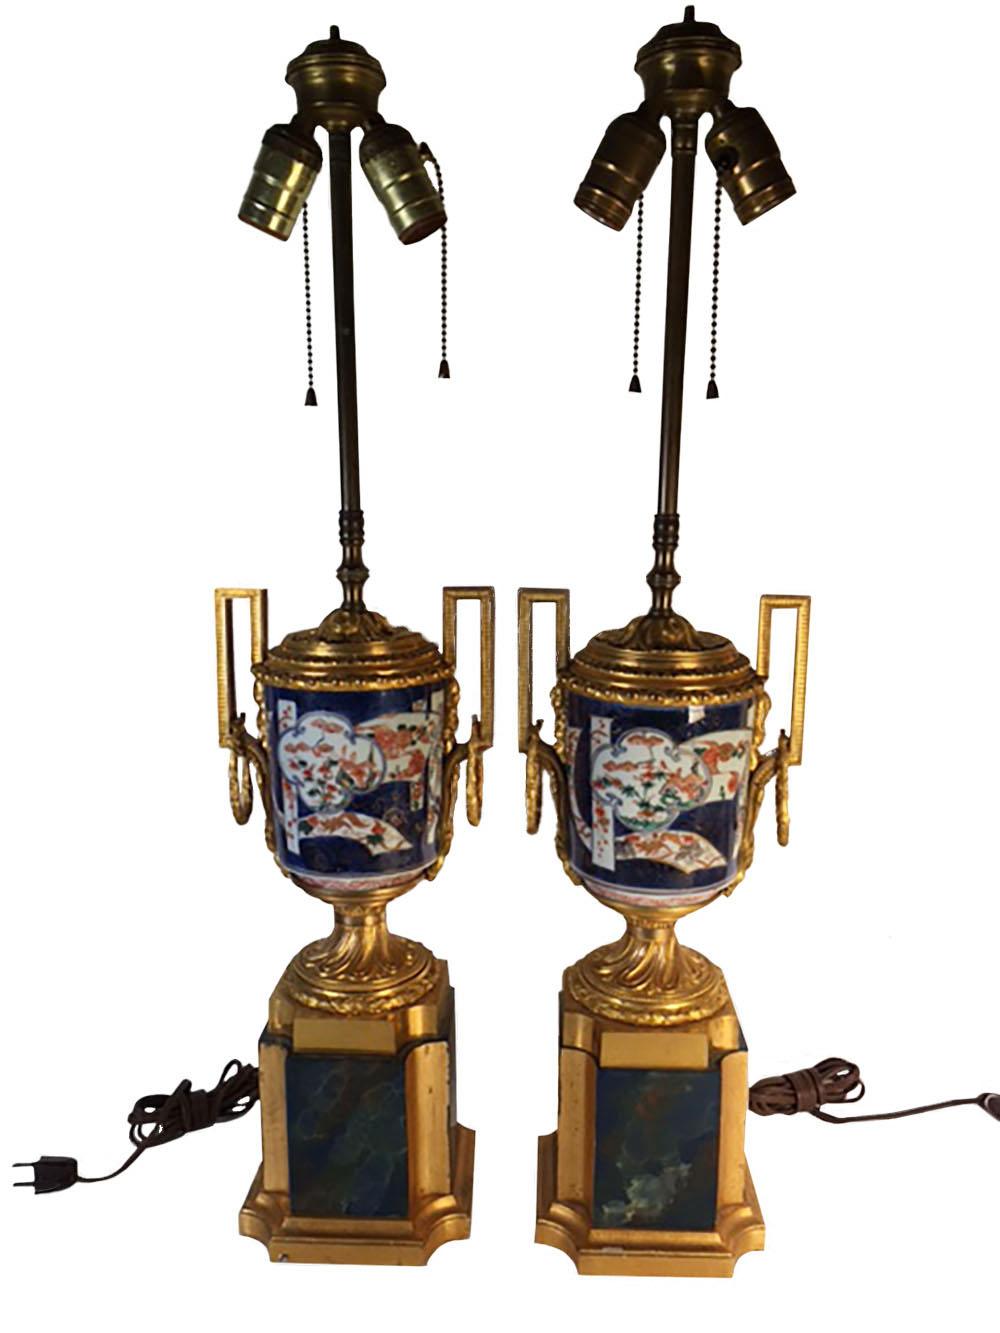 Ein Paar japanische Arita Vasen Bronze doré montiert in Lampen umgewandelt. Um 1820.
  